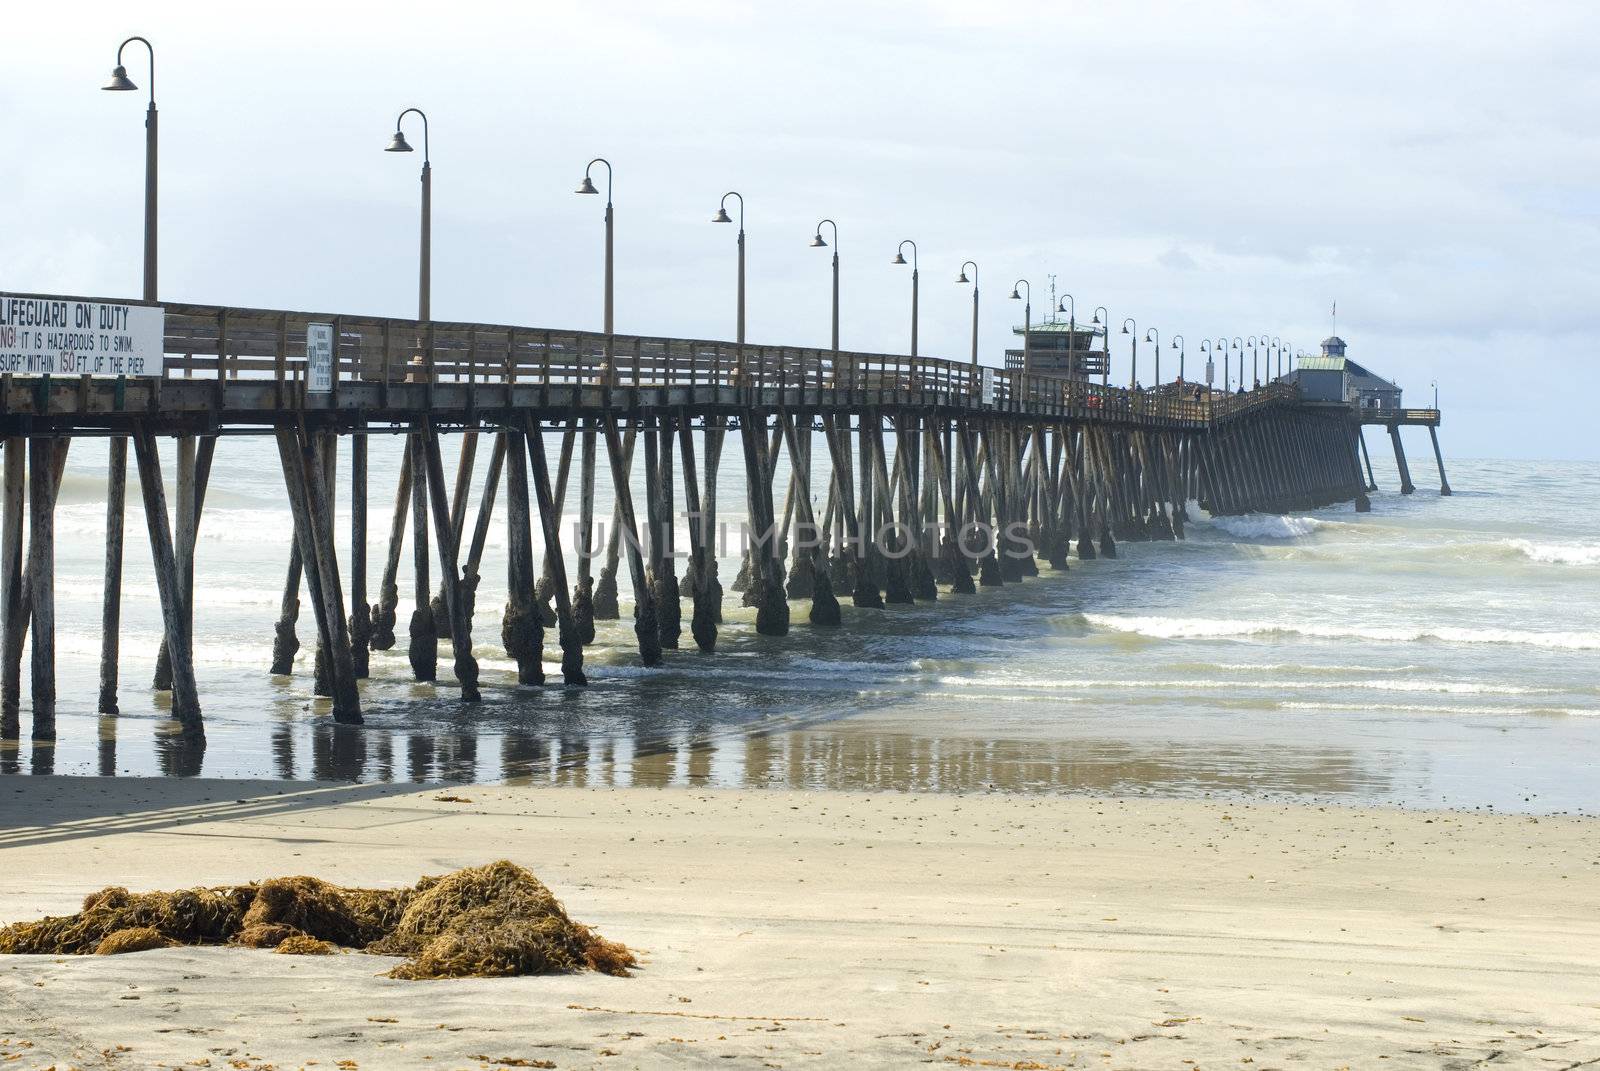 Wooden pier at Imperial Beach, California, USA